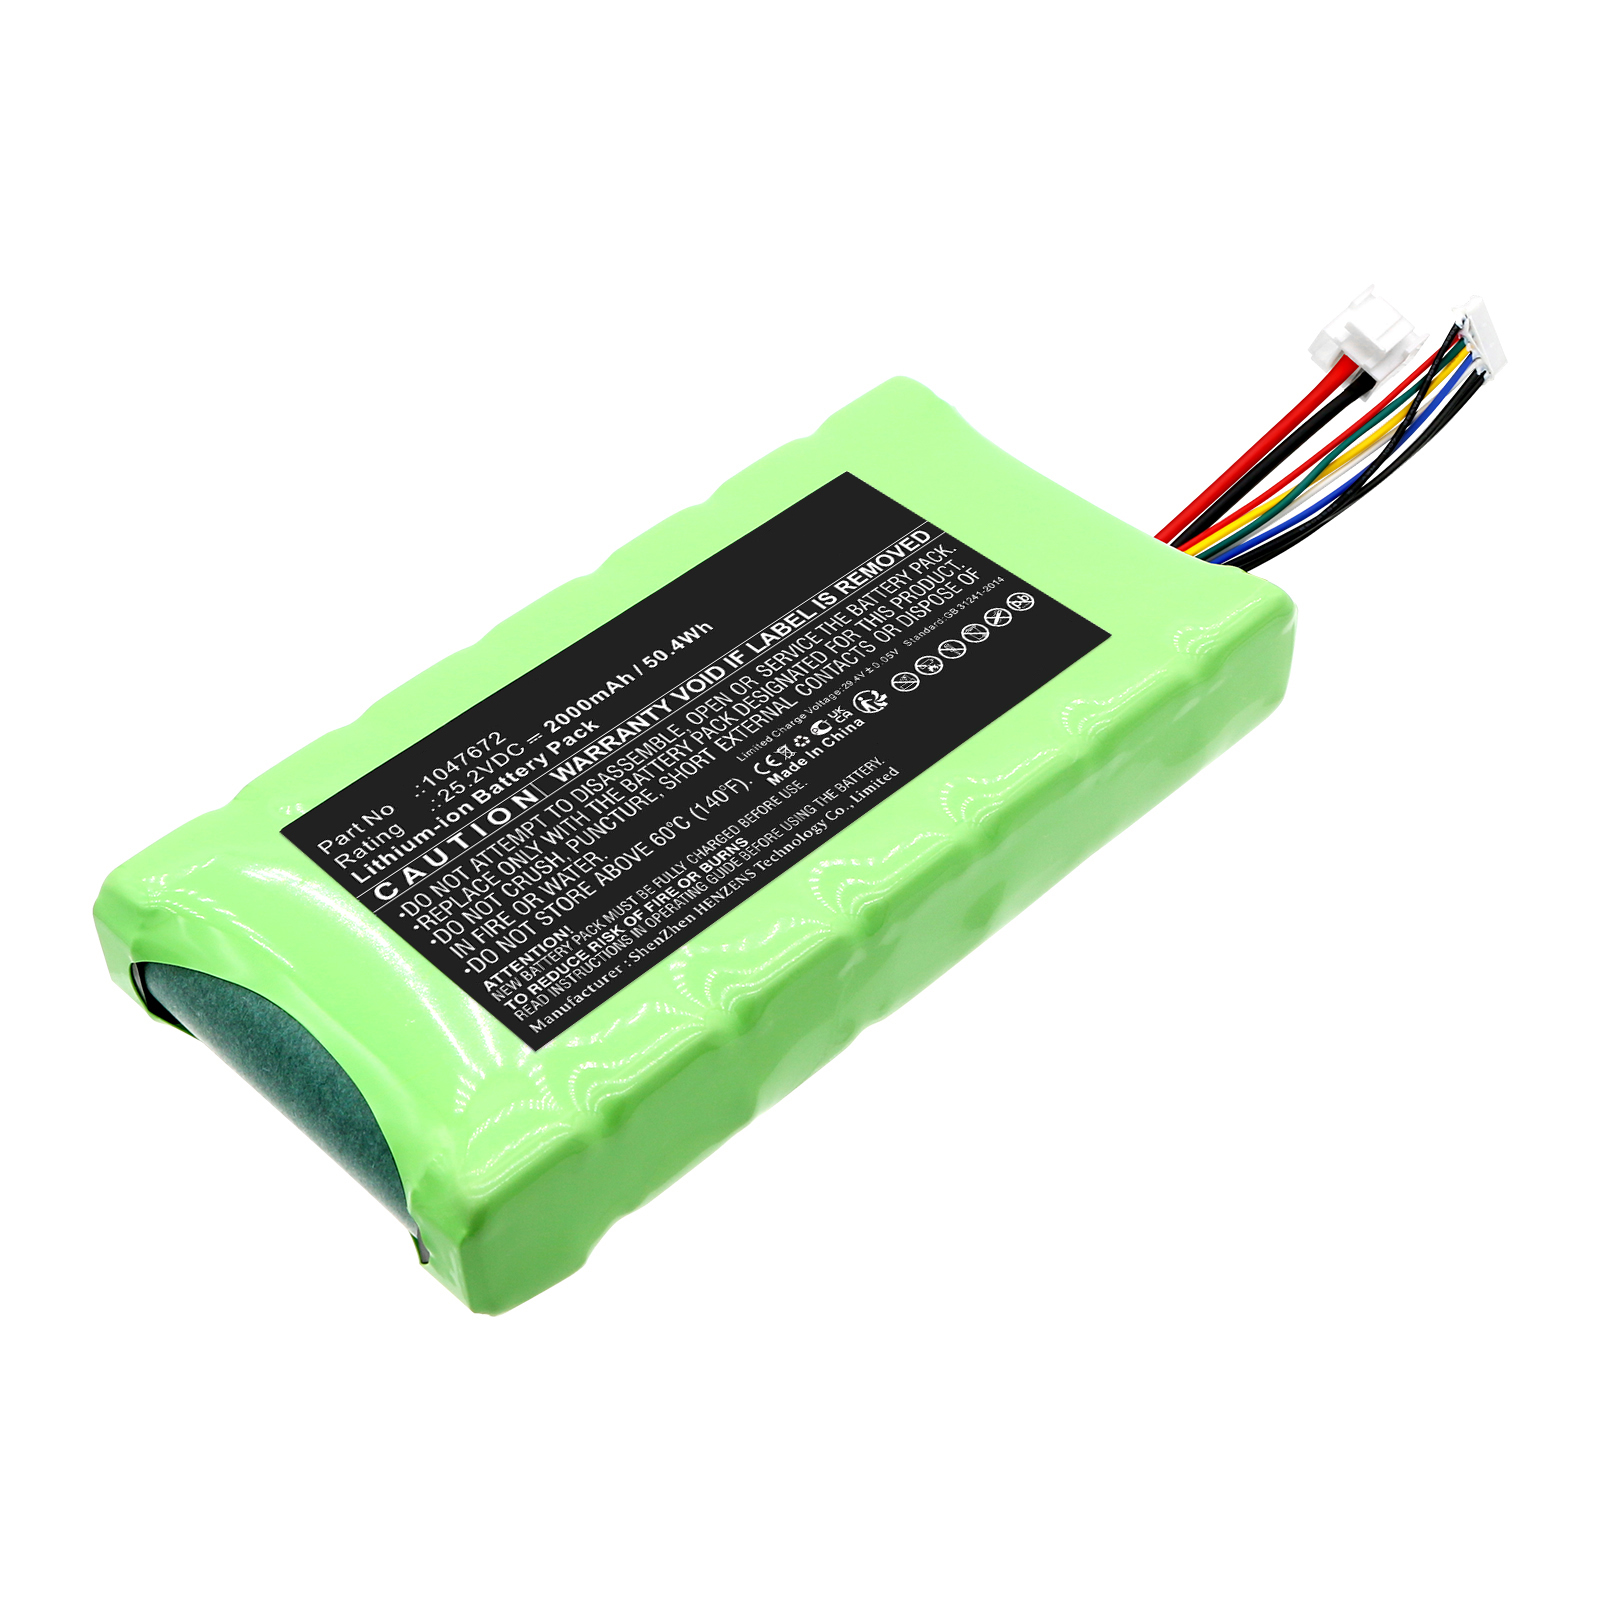 Synergy Digital Vacuum Cleaner Battery, Compatible with AMICA 1047672 Vacuum Cleaner Battery (Li-ion, 25.2V, 2000mAh)